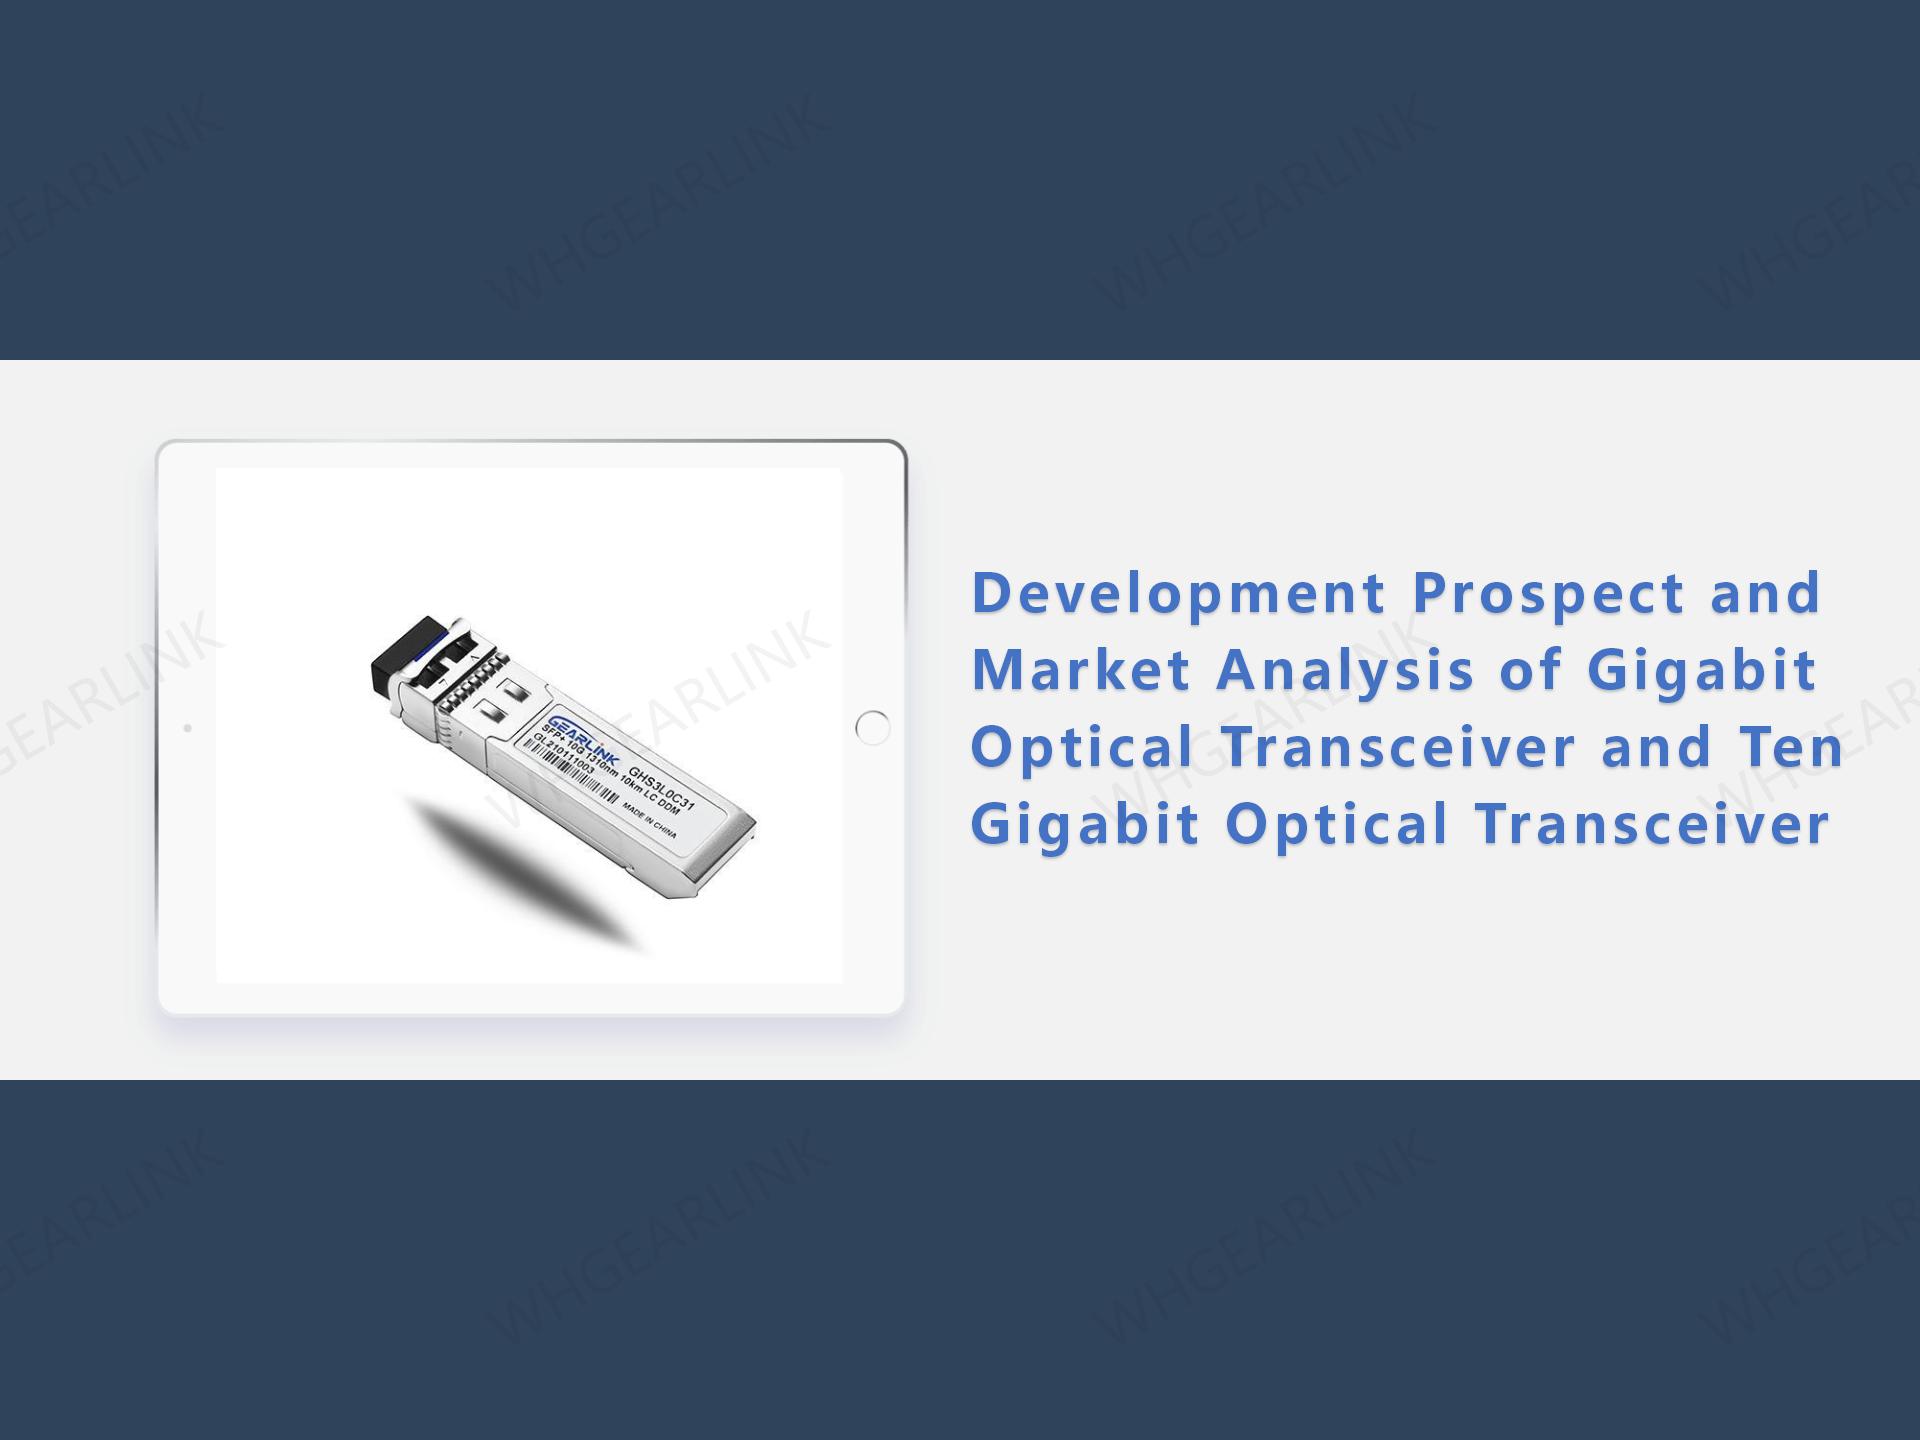 Development Prospect and Market Analysis of Gigabit Optical Transceiver and Ten Gigabit Optical Transceiver